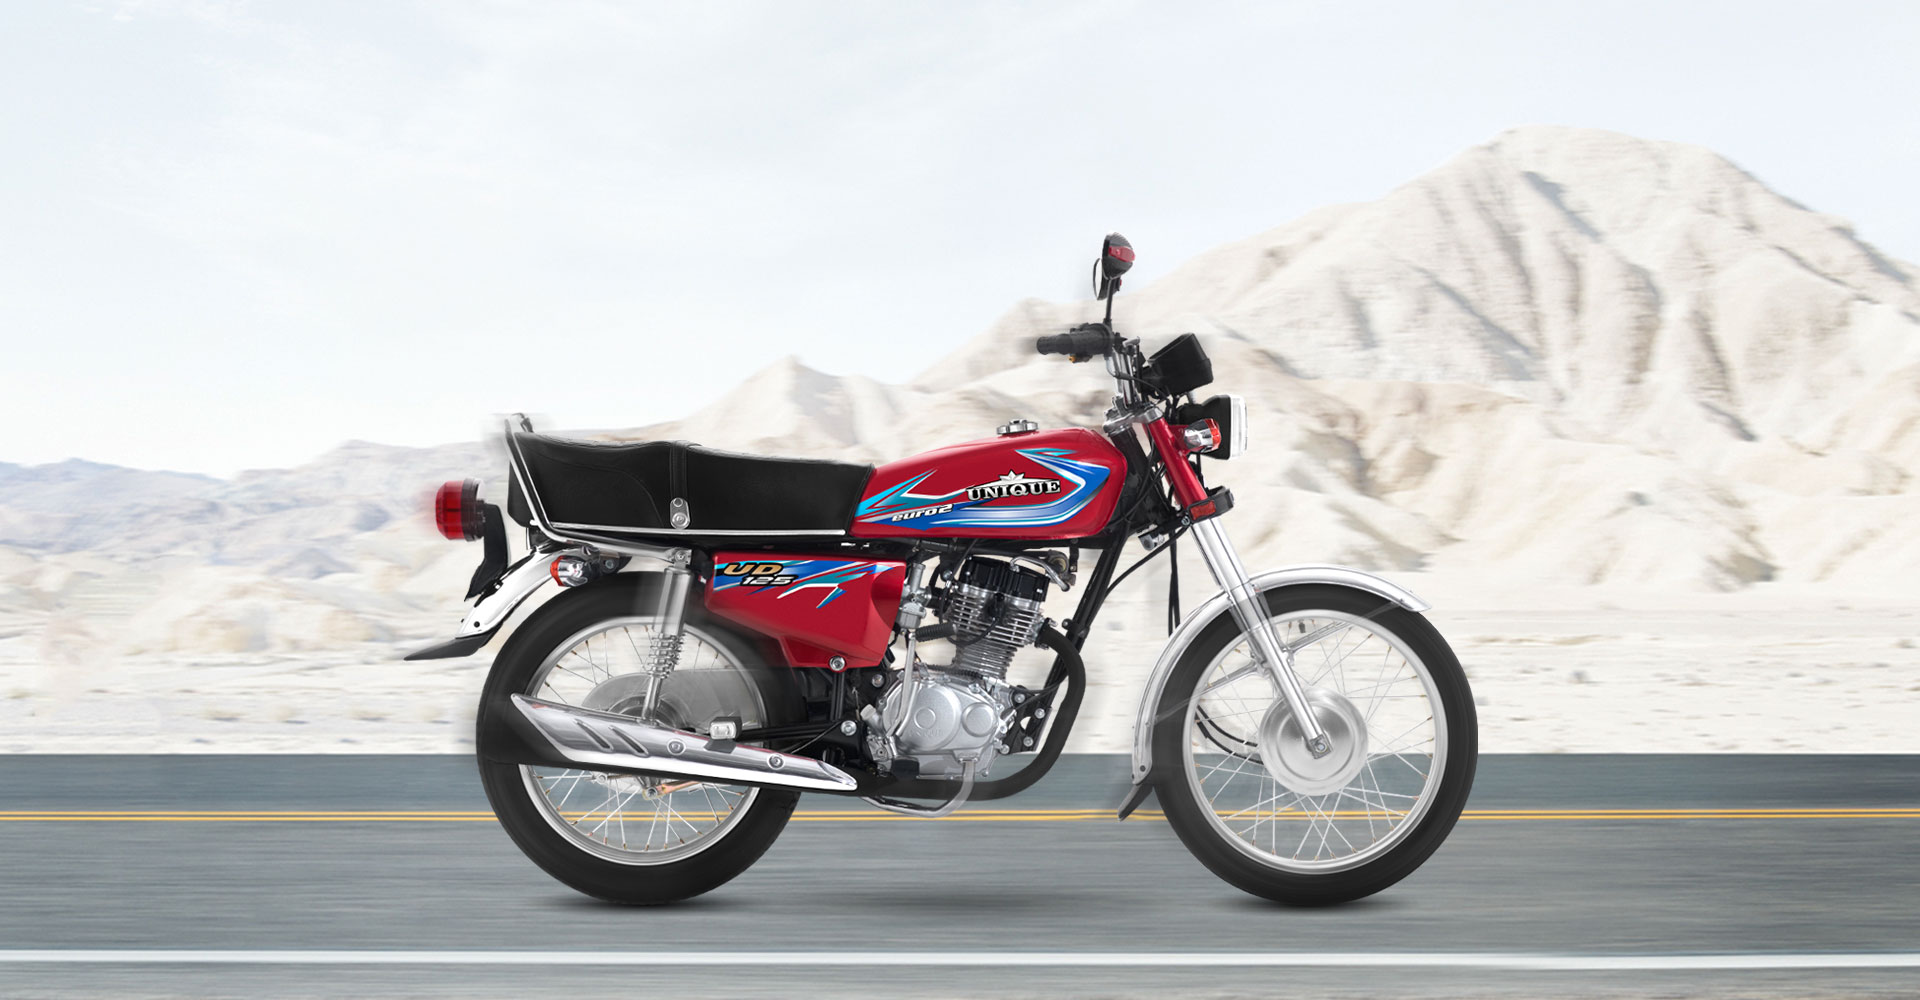 Unique UD 125cc Price in Pakistan 2020 New Model Pictures